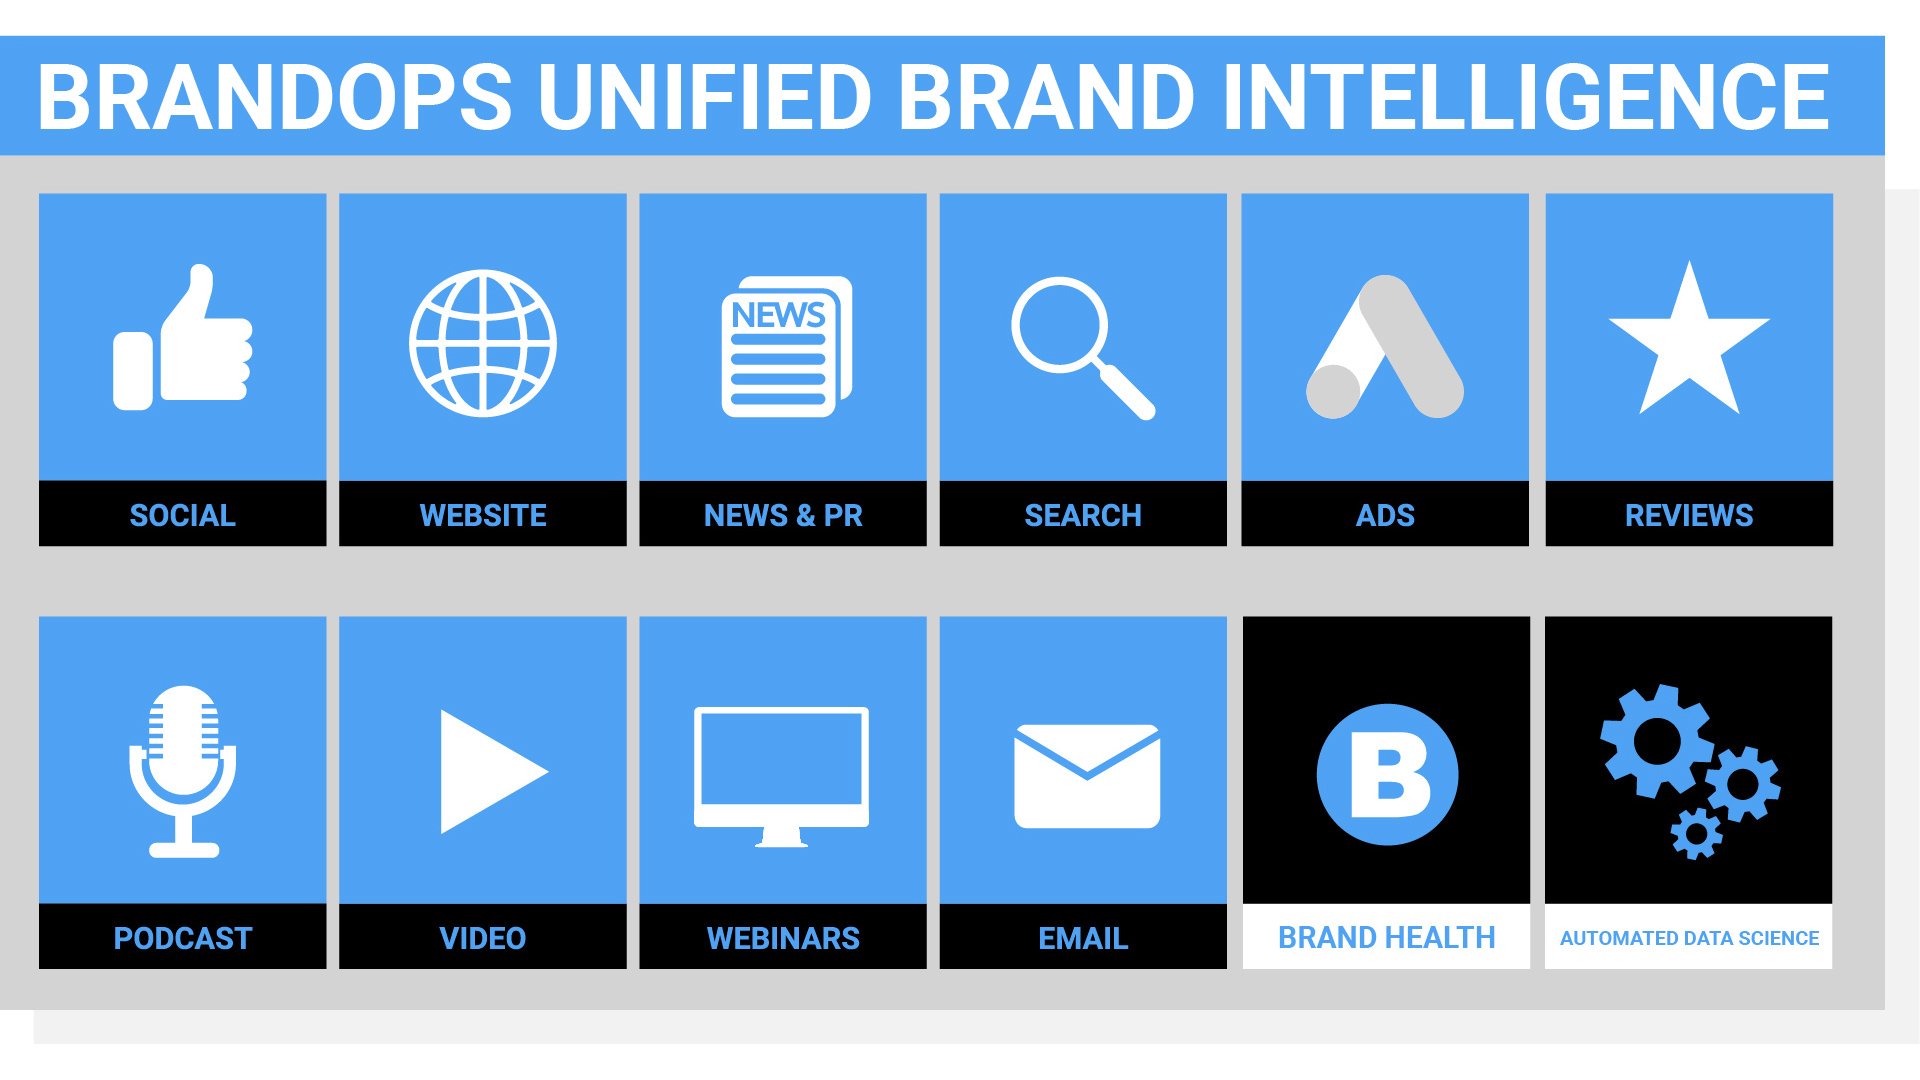 BrandOps Unified Brand Intelligence